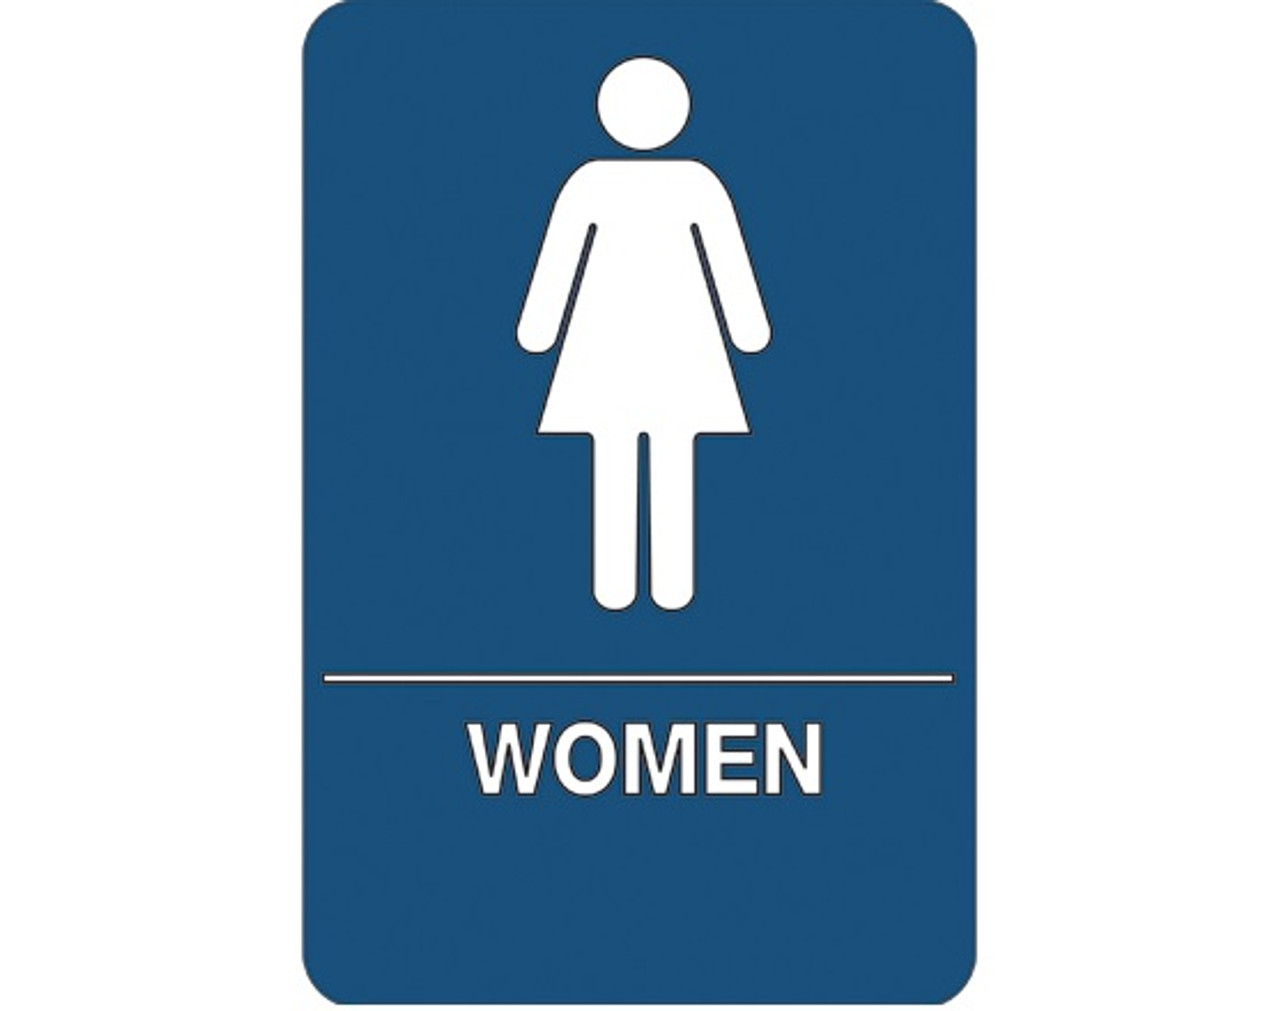 Women Restroom ADA Compliant Plastic Sign  50389.1498836247 ?c=2&imbypass=on